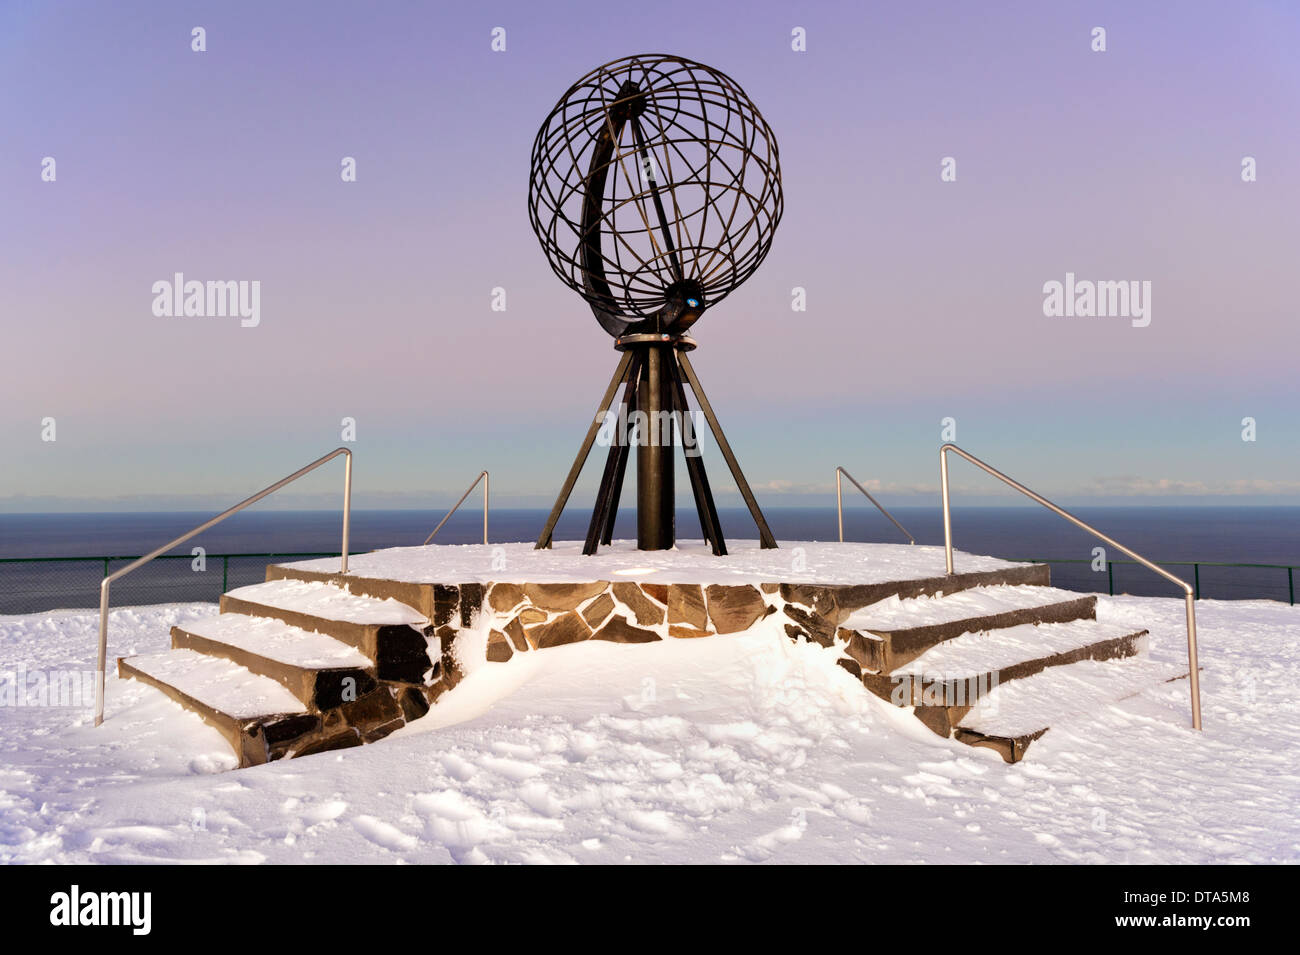 Winter am Nordkap mit Globus-Skulptur, in der Nähe von Honningsvåg, Finnmark, Norwegen, dem nördlichsten Punkt Europas Stockfoto